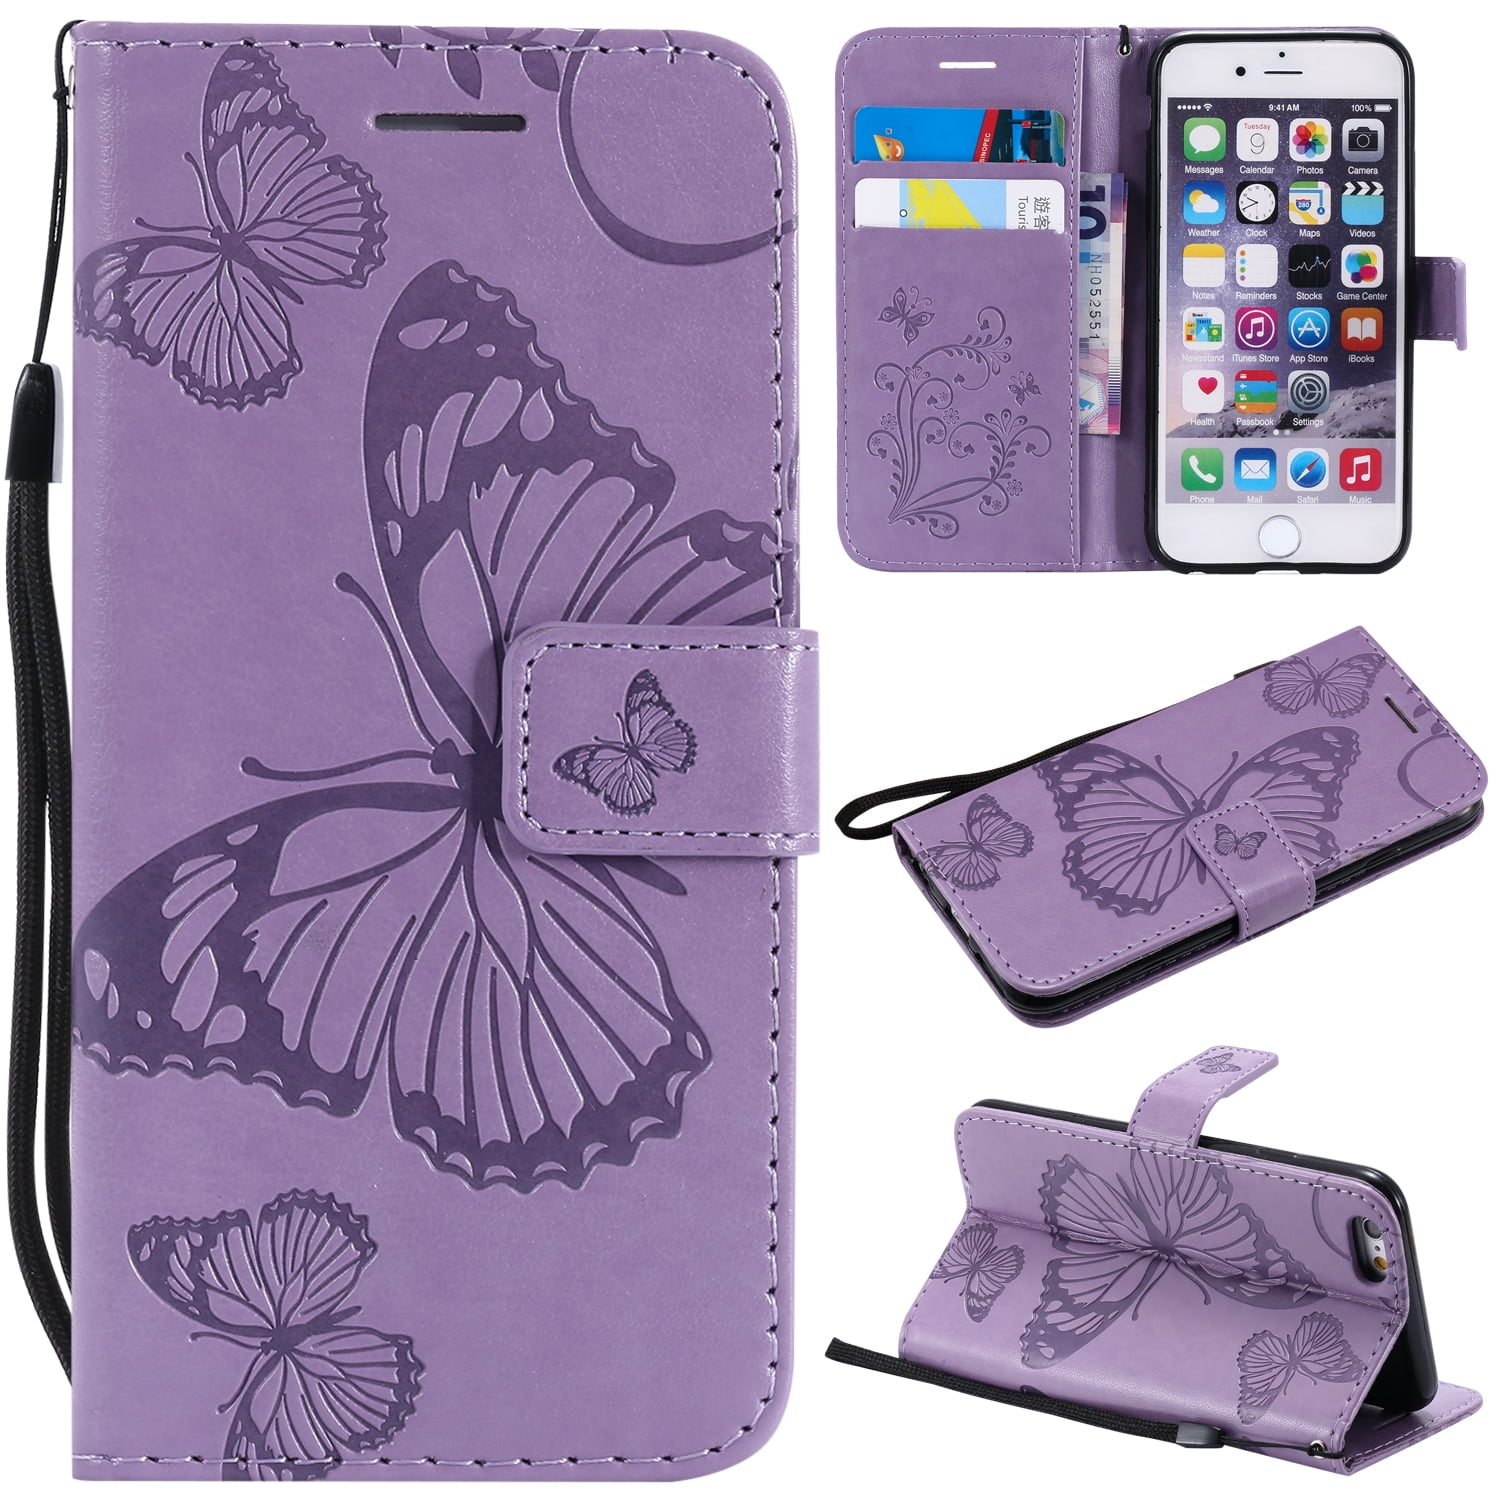 Woordenlijst scheiden Zee iPhone 6 Plus/ 6S Plus Wallet case, Allytech Pretty Retro Embossed  Butterfly Flower Design PU Leather Book Style Wallet Flip Case Cover for Apple  iPhone 6 Plus and iPhone 6S Plus, Purple -